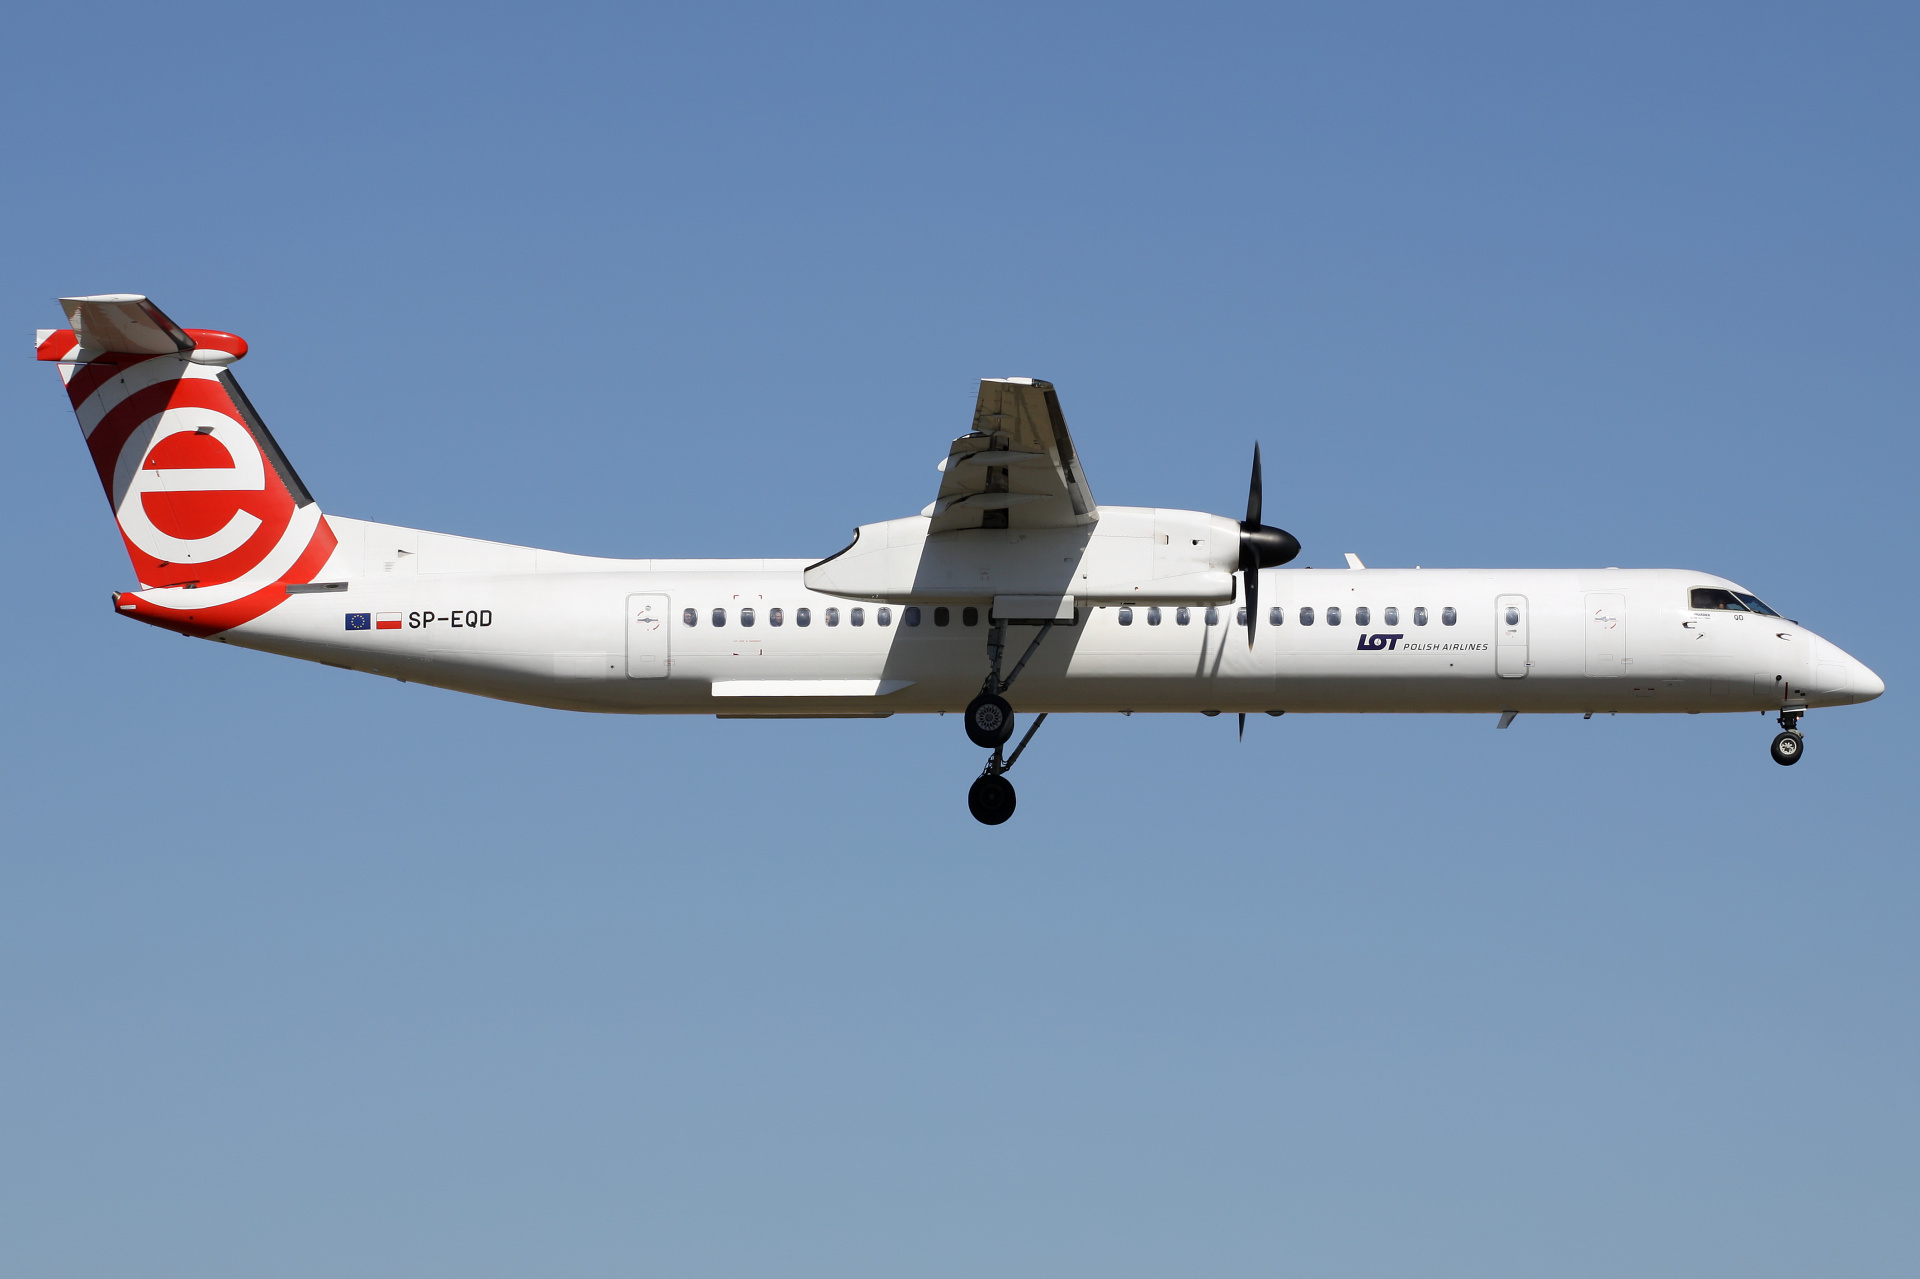 SP-EQD (EuroLOT partial livery) (Aircraft » EPWA Spotting » De Havilland Canada DHC-8 Dash 8 » LOT Polish Airlines)